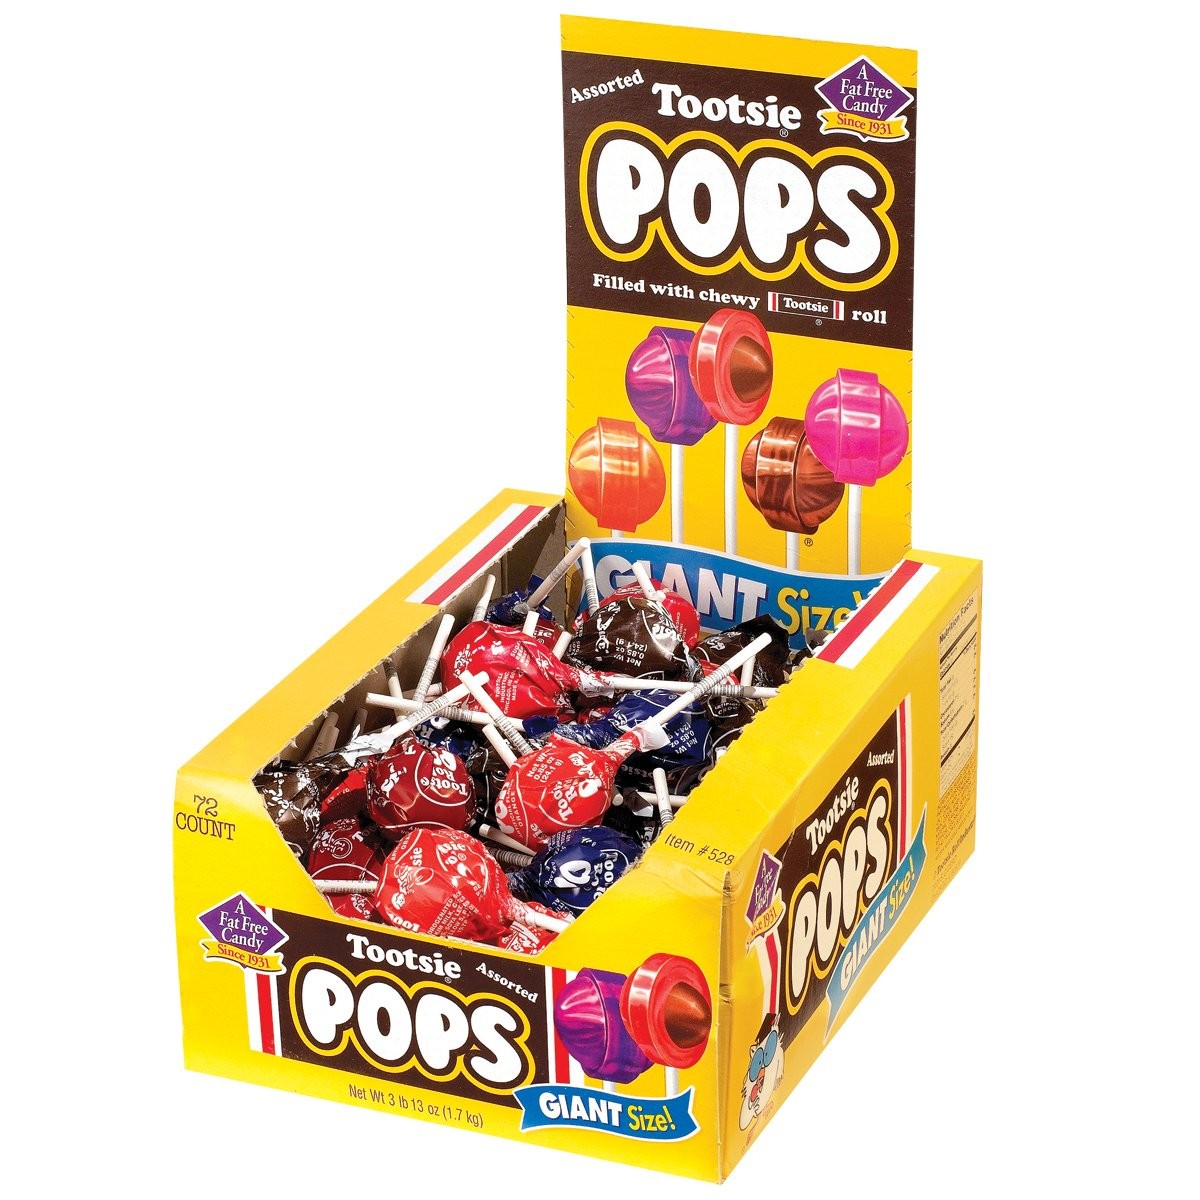 Dots Gumdrops, Assorted Fruit Flavored - 17 mini boxes, 13.5 oz